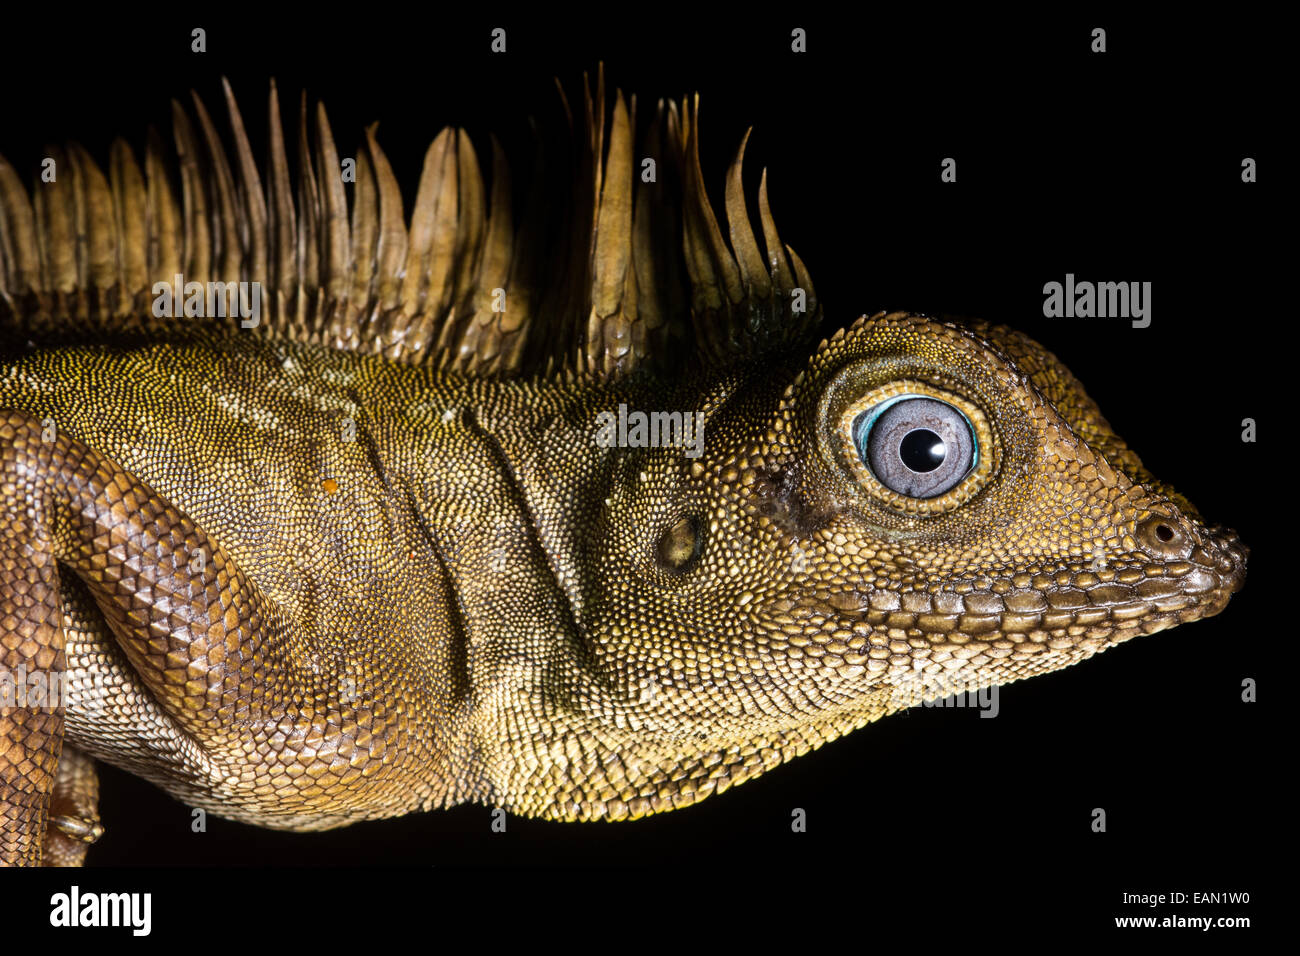 A bornean angle headed lizard portrait Stock Photo